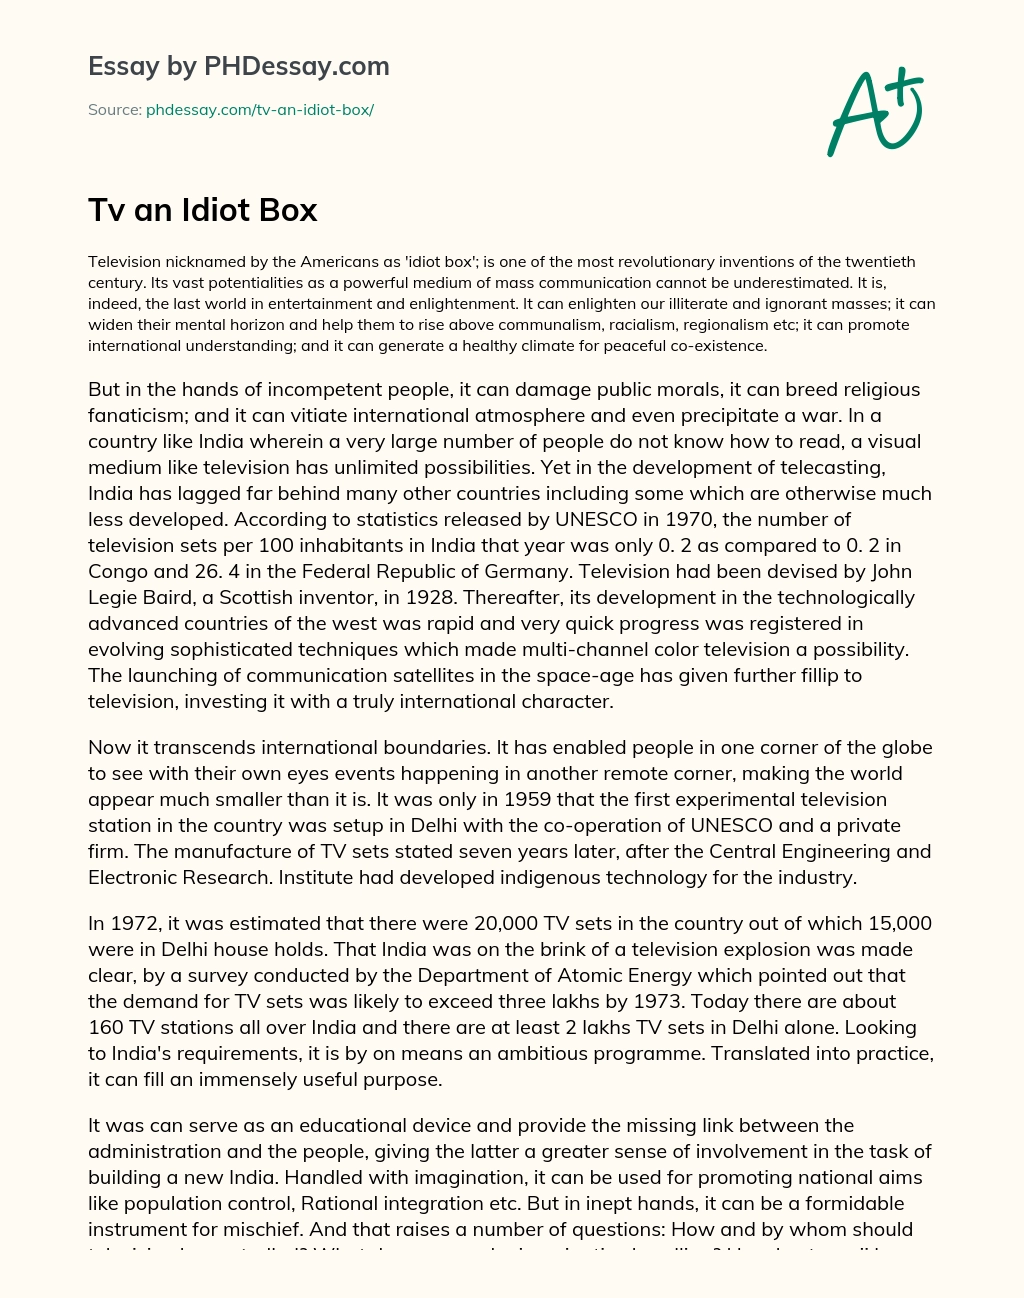 essay on tv an idiot box